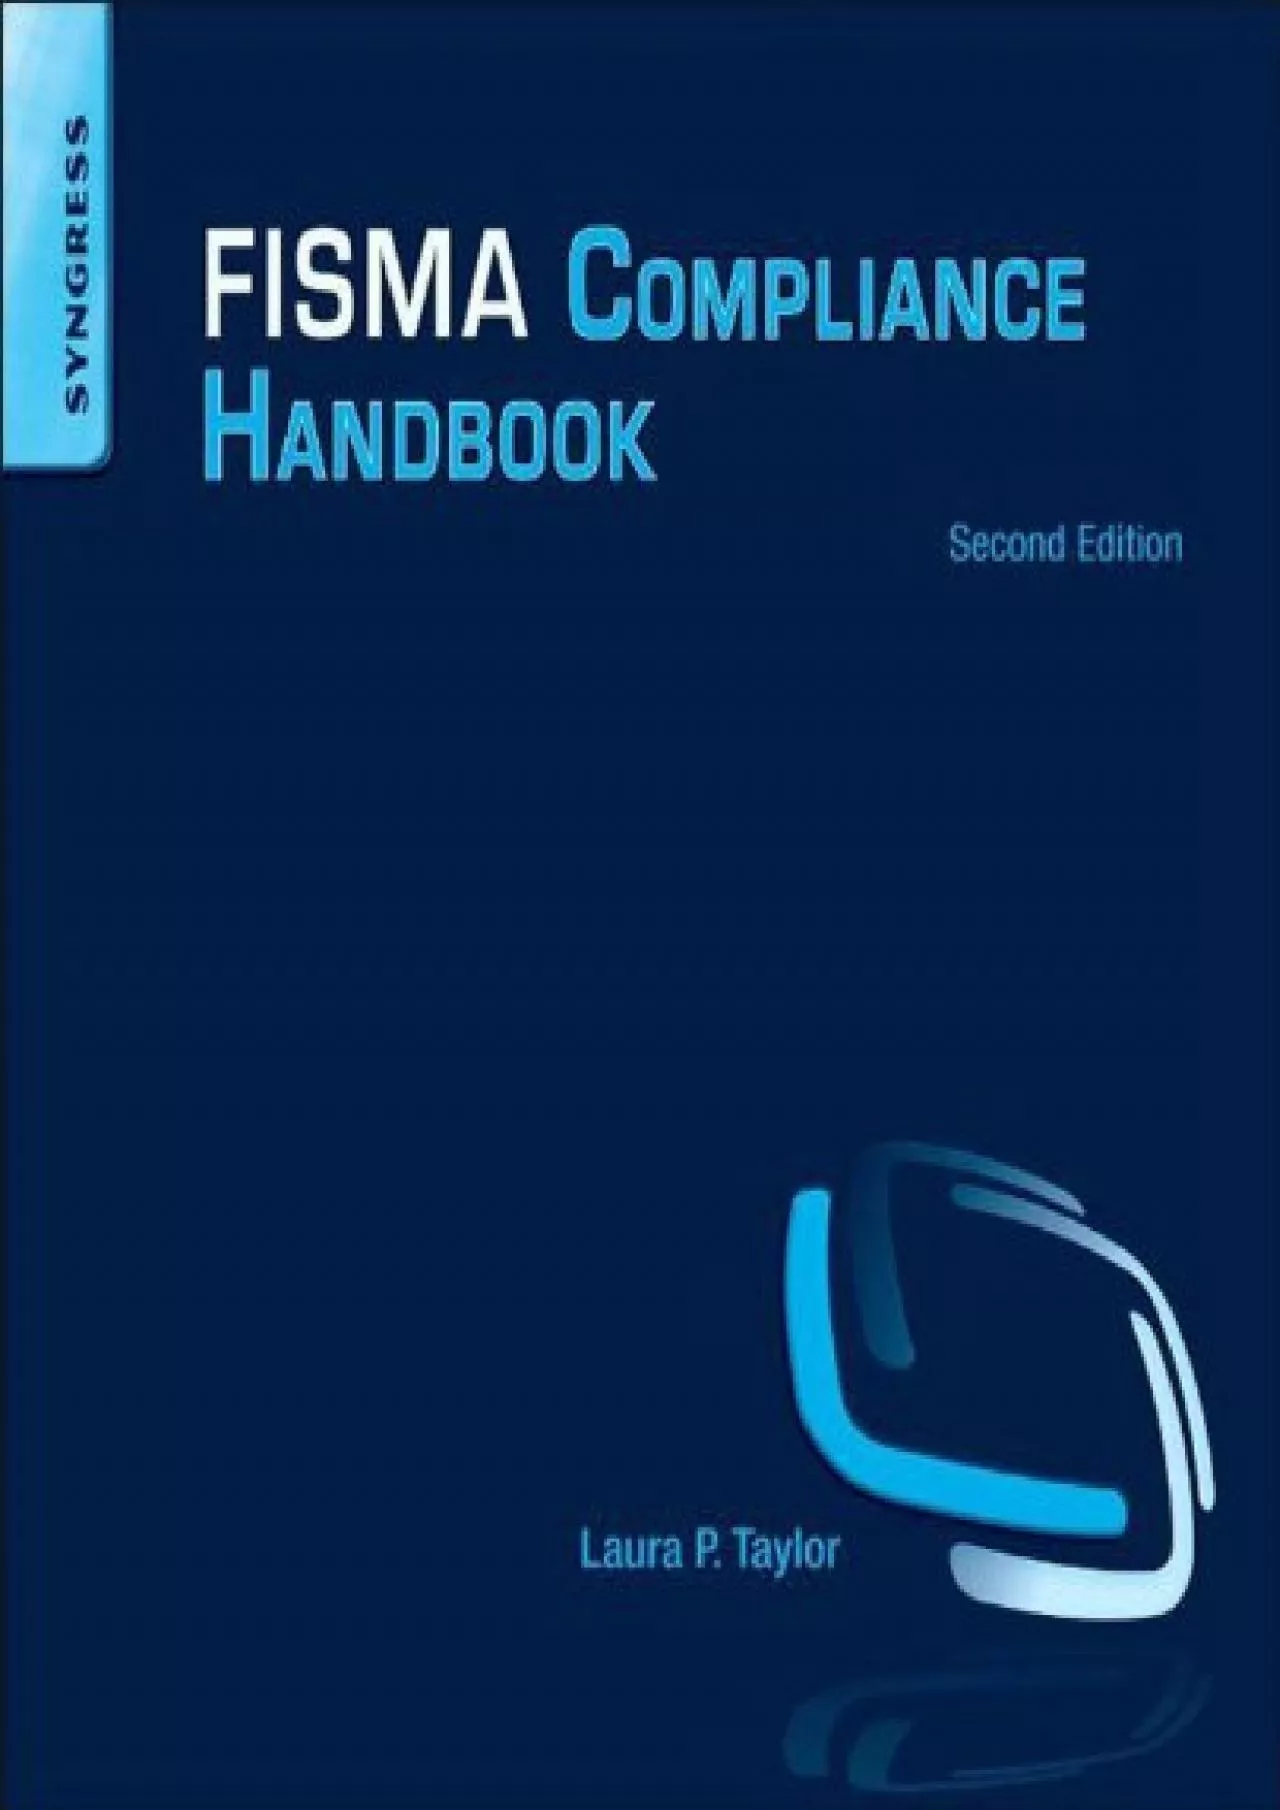 [READ]-FISMA Compliance Handbook: Second Edition